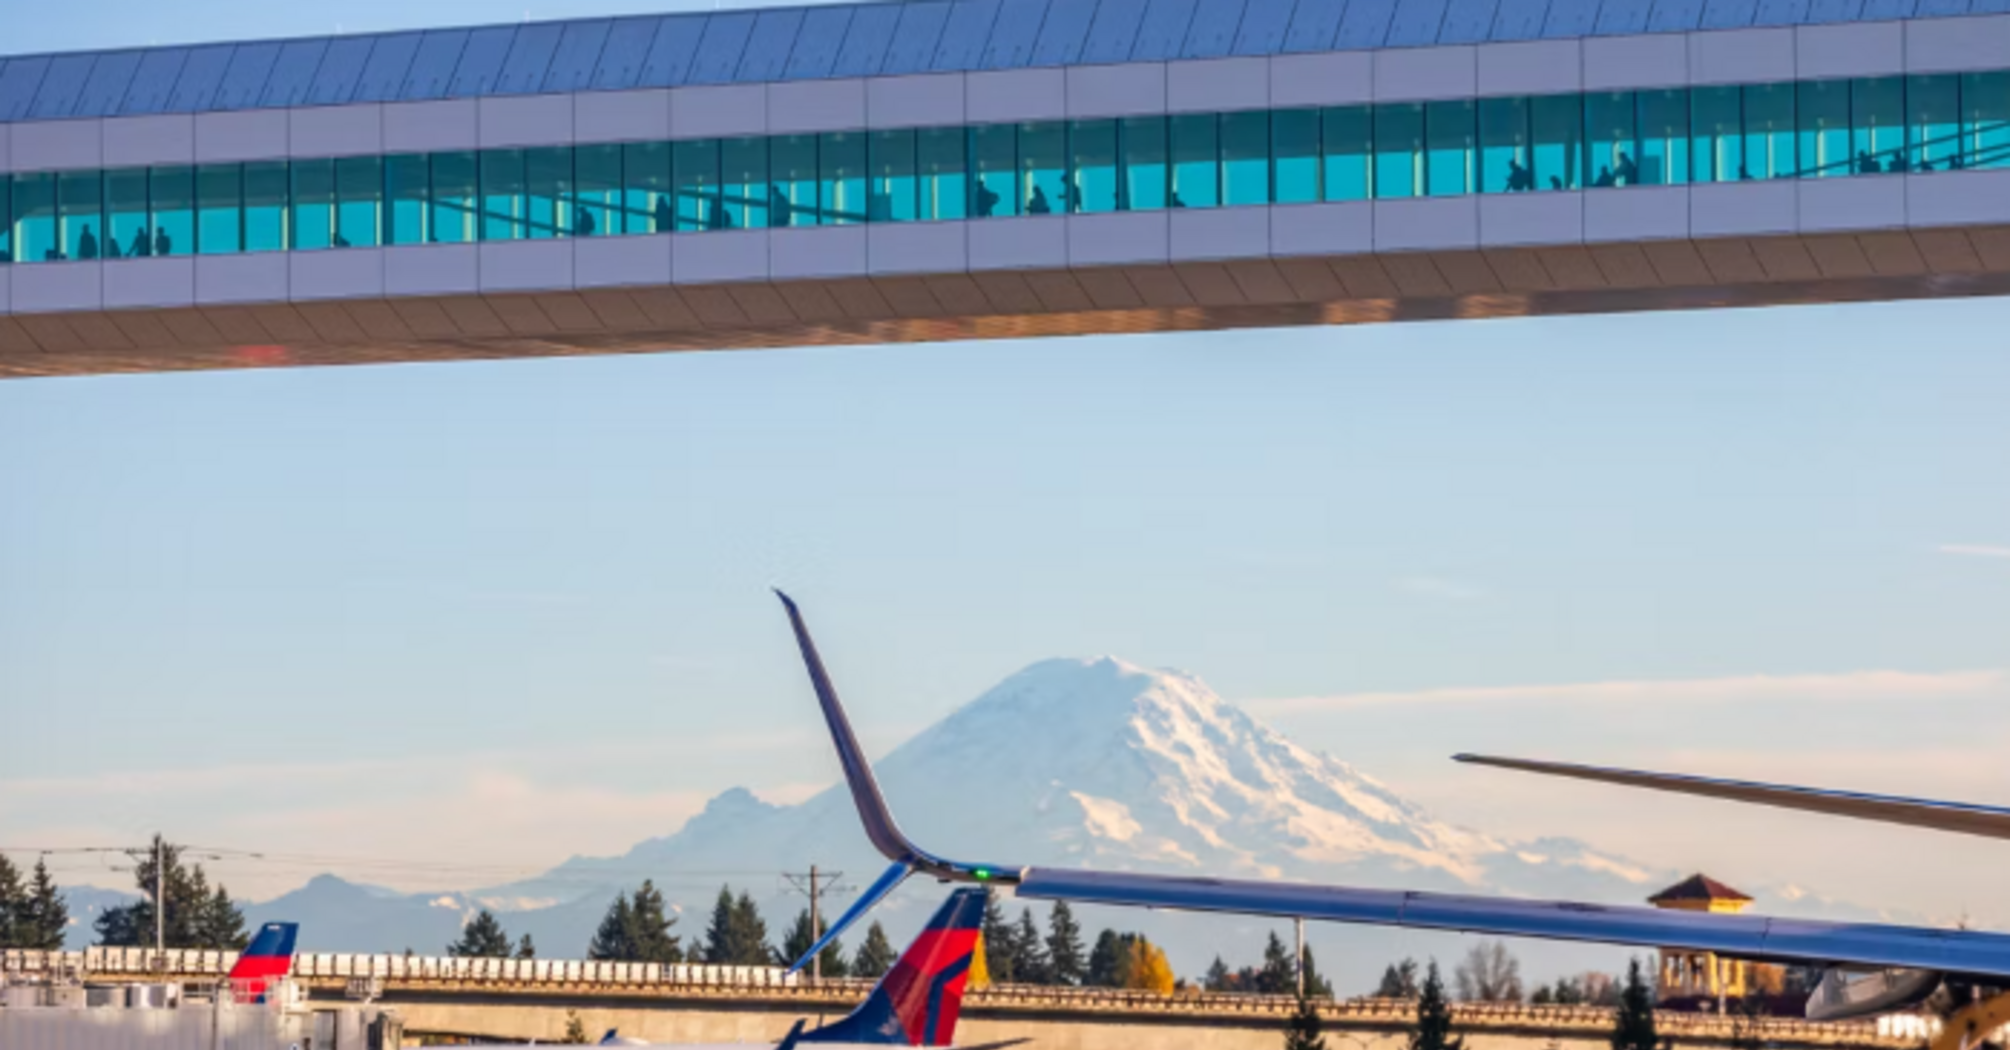 Seattle Tacoma Airport